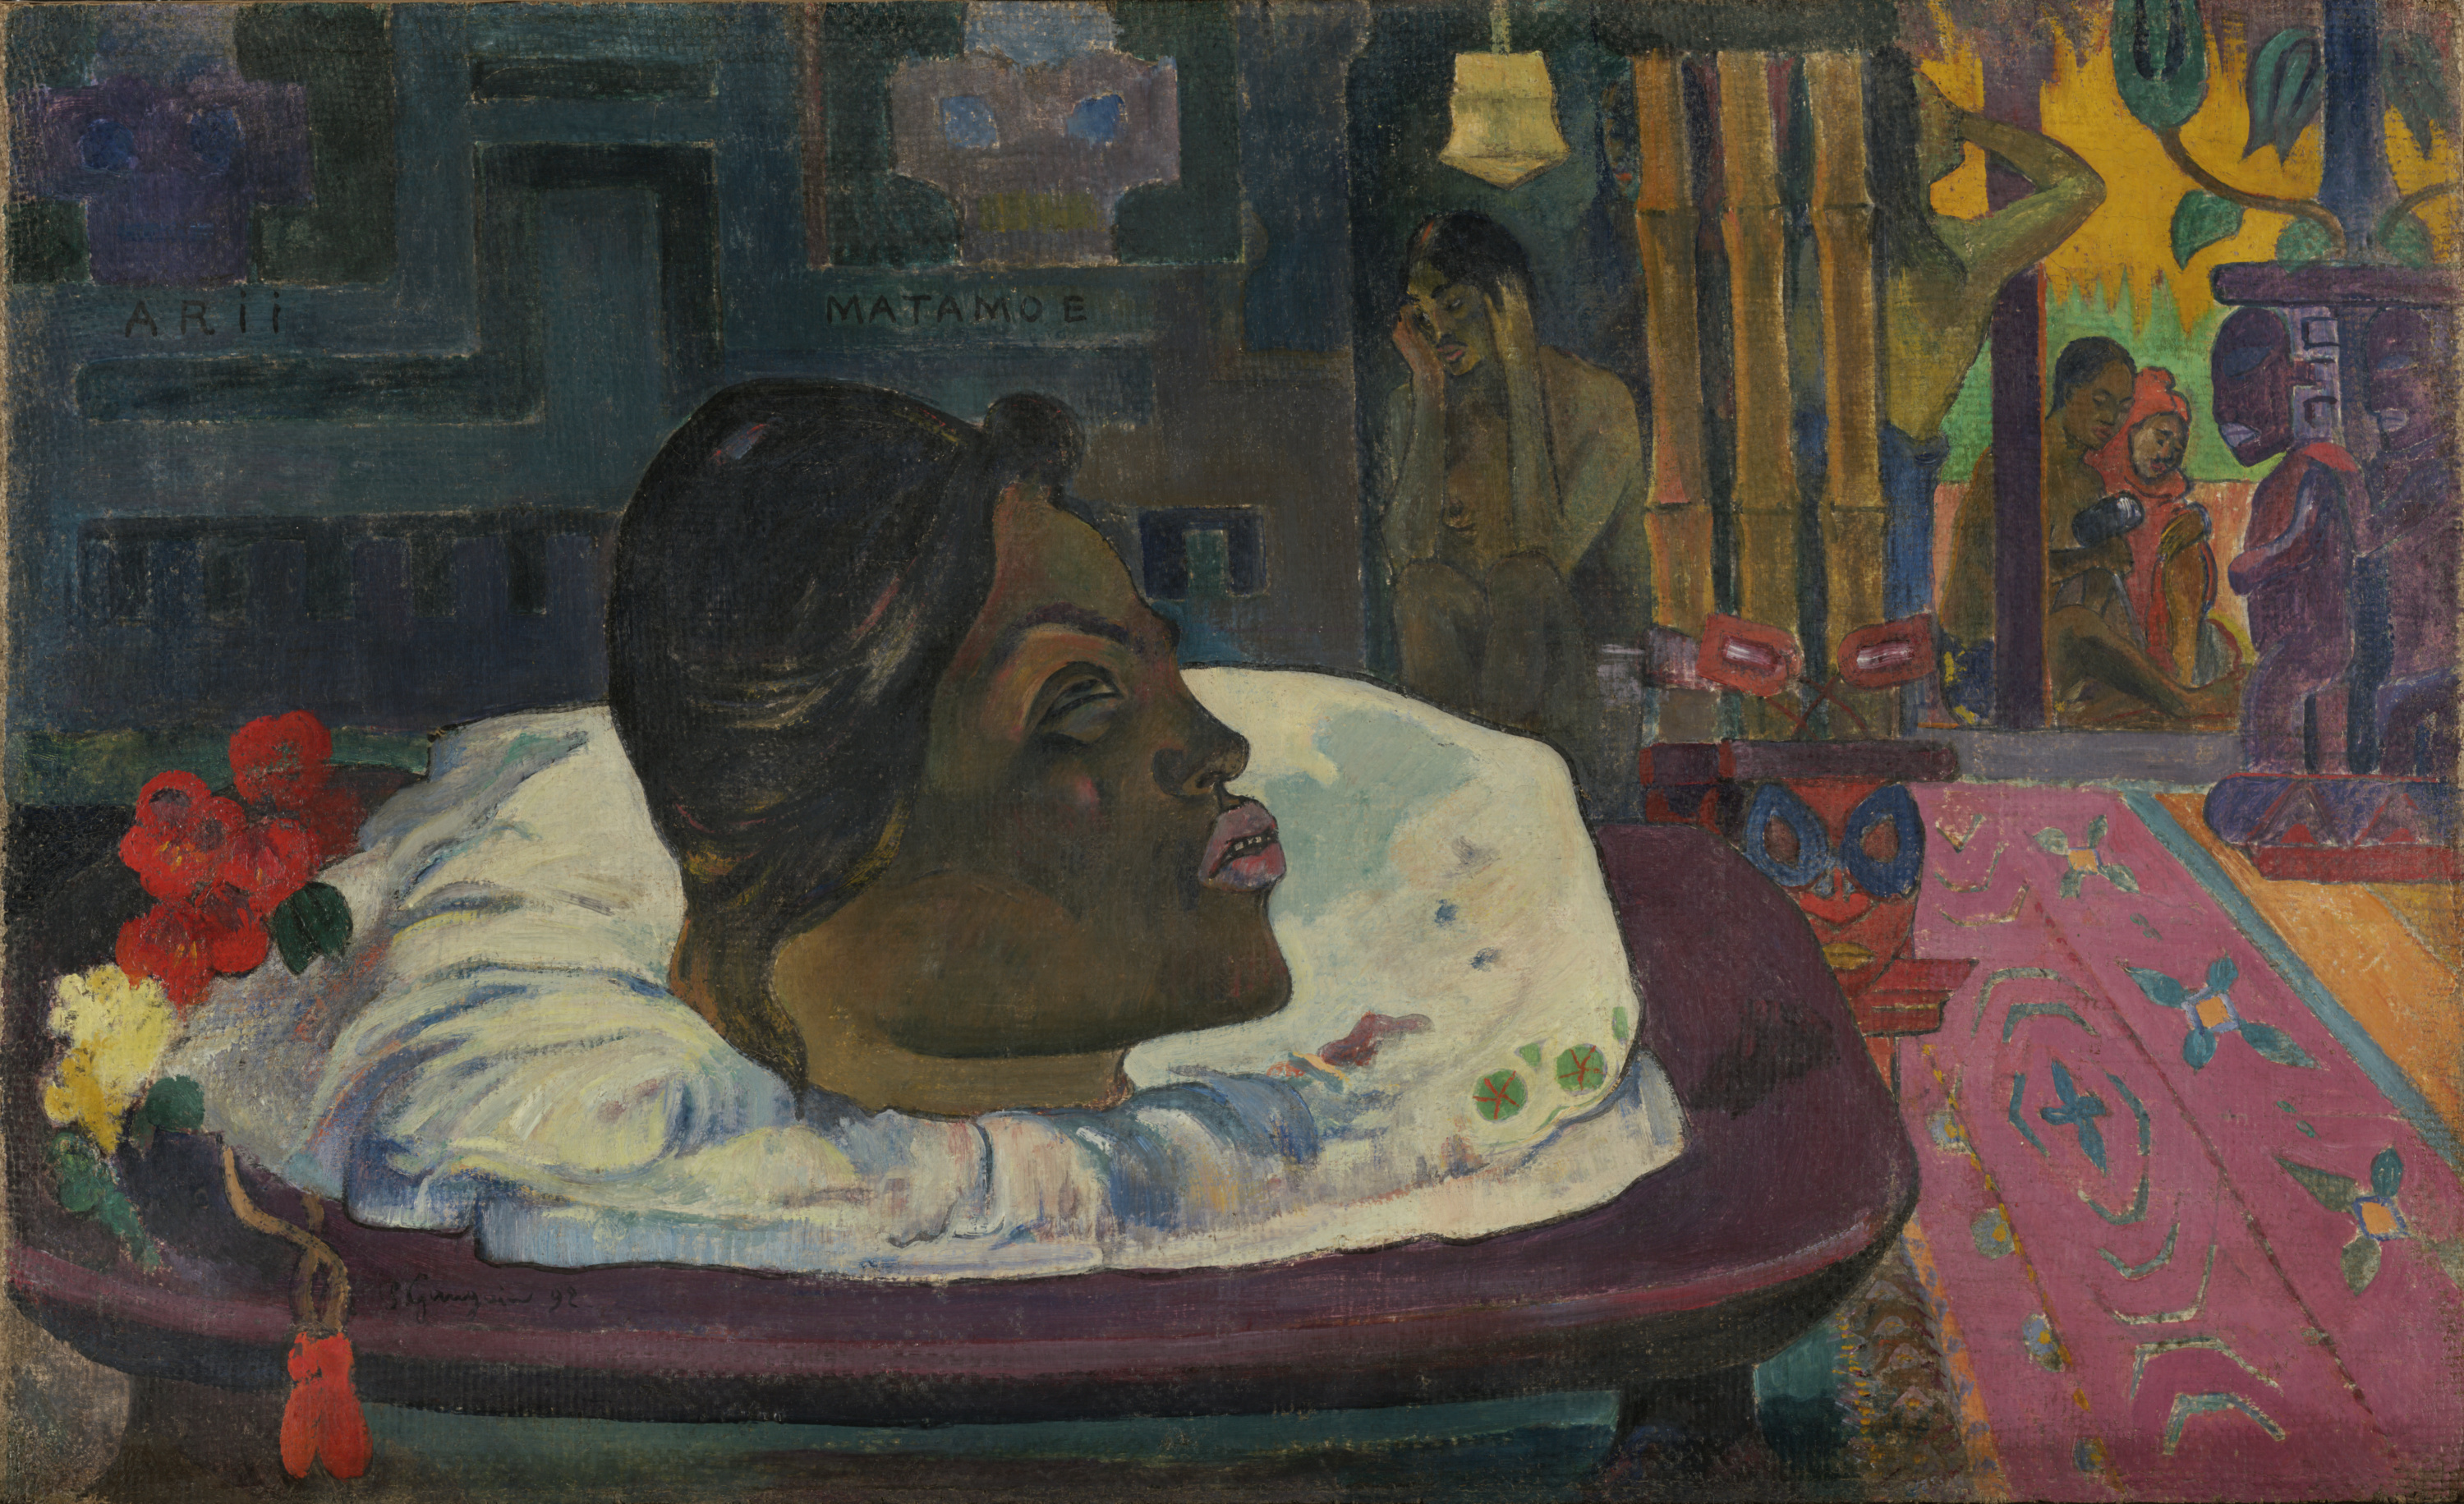 Arii Matamoe (The Royal End) by Paul Gauguin - 1892 - 45.1 × 74.3 cm J. Paul Getty Museum